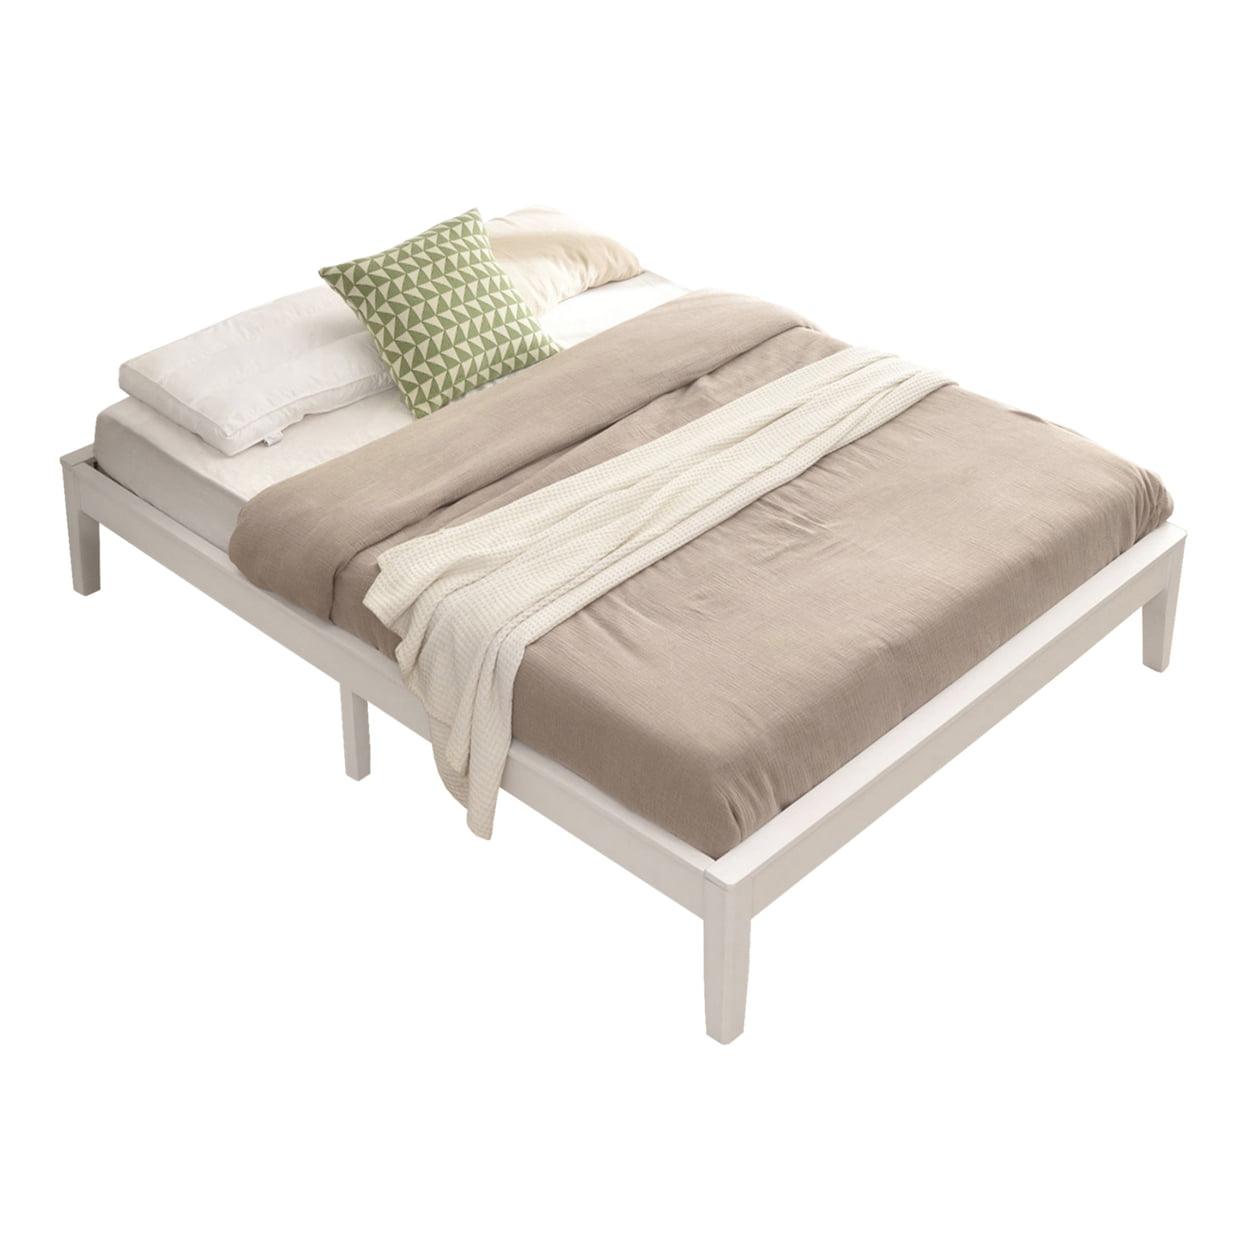 Stella Solid Pine Wood Full Platform Bed Frame - Modern White